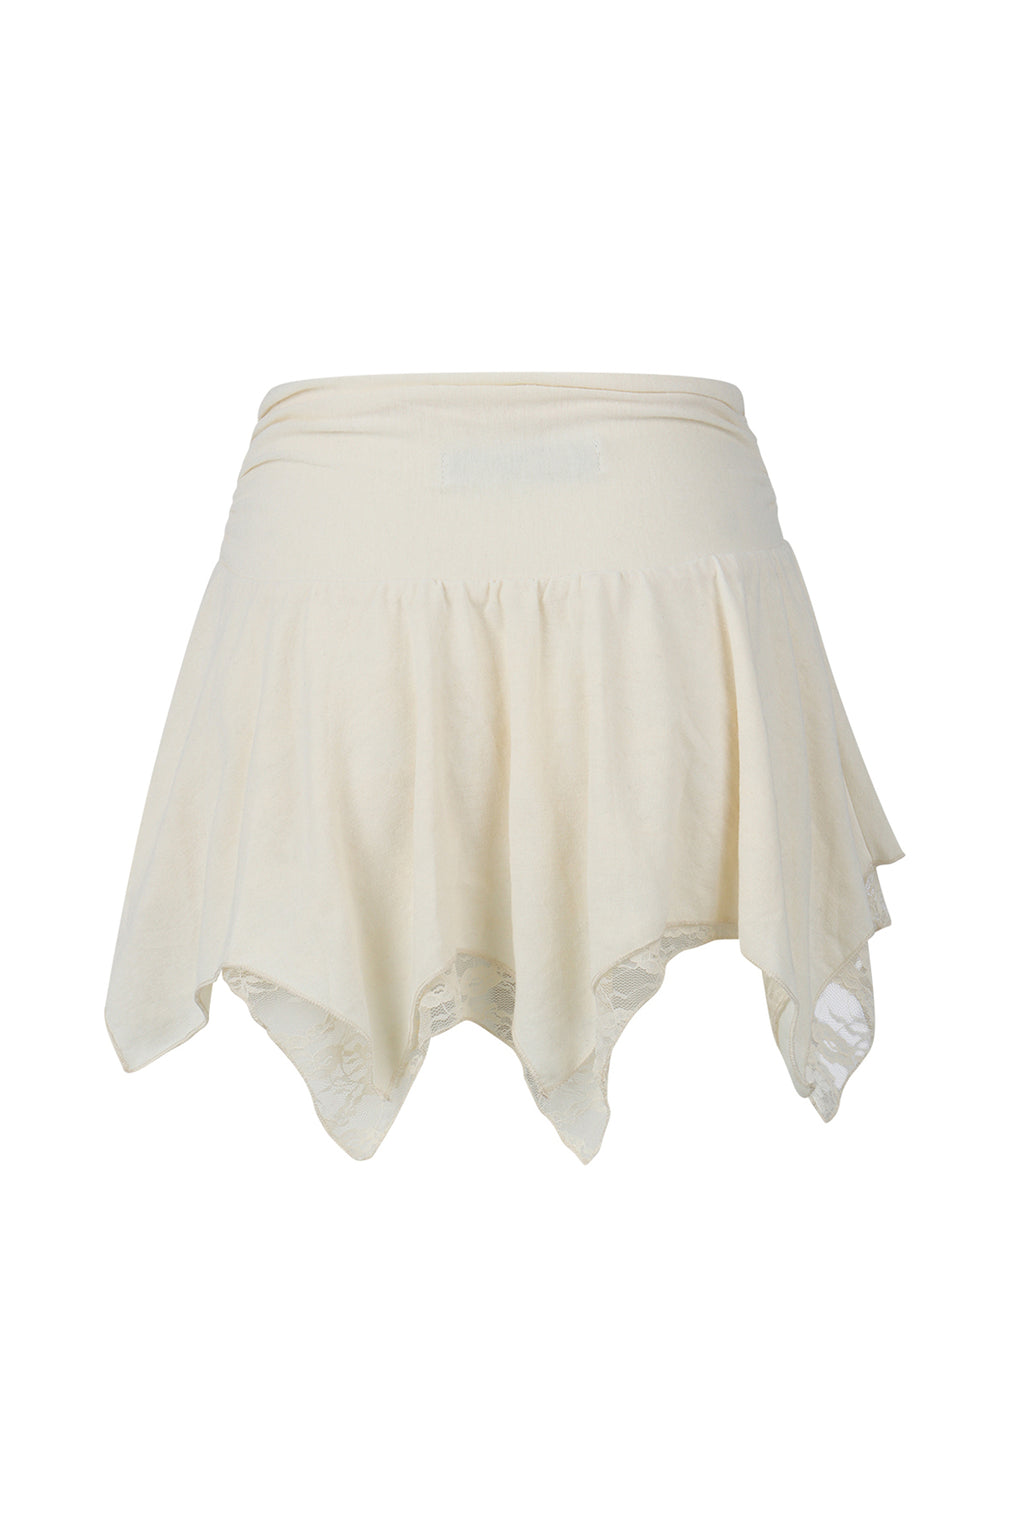 Candle Light Cream Lace Trim Fairy Cut Mini Skirt